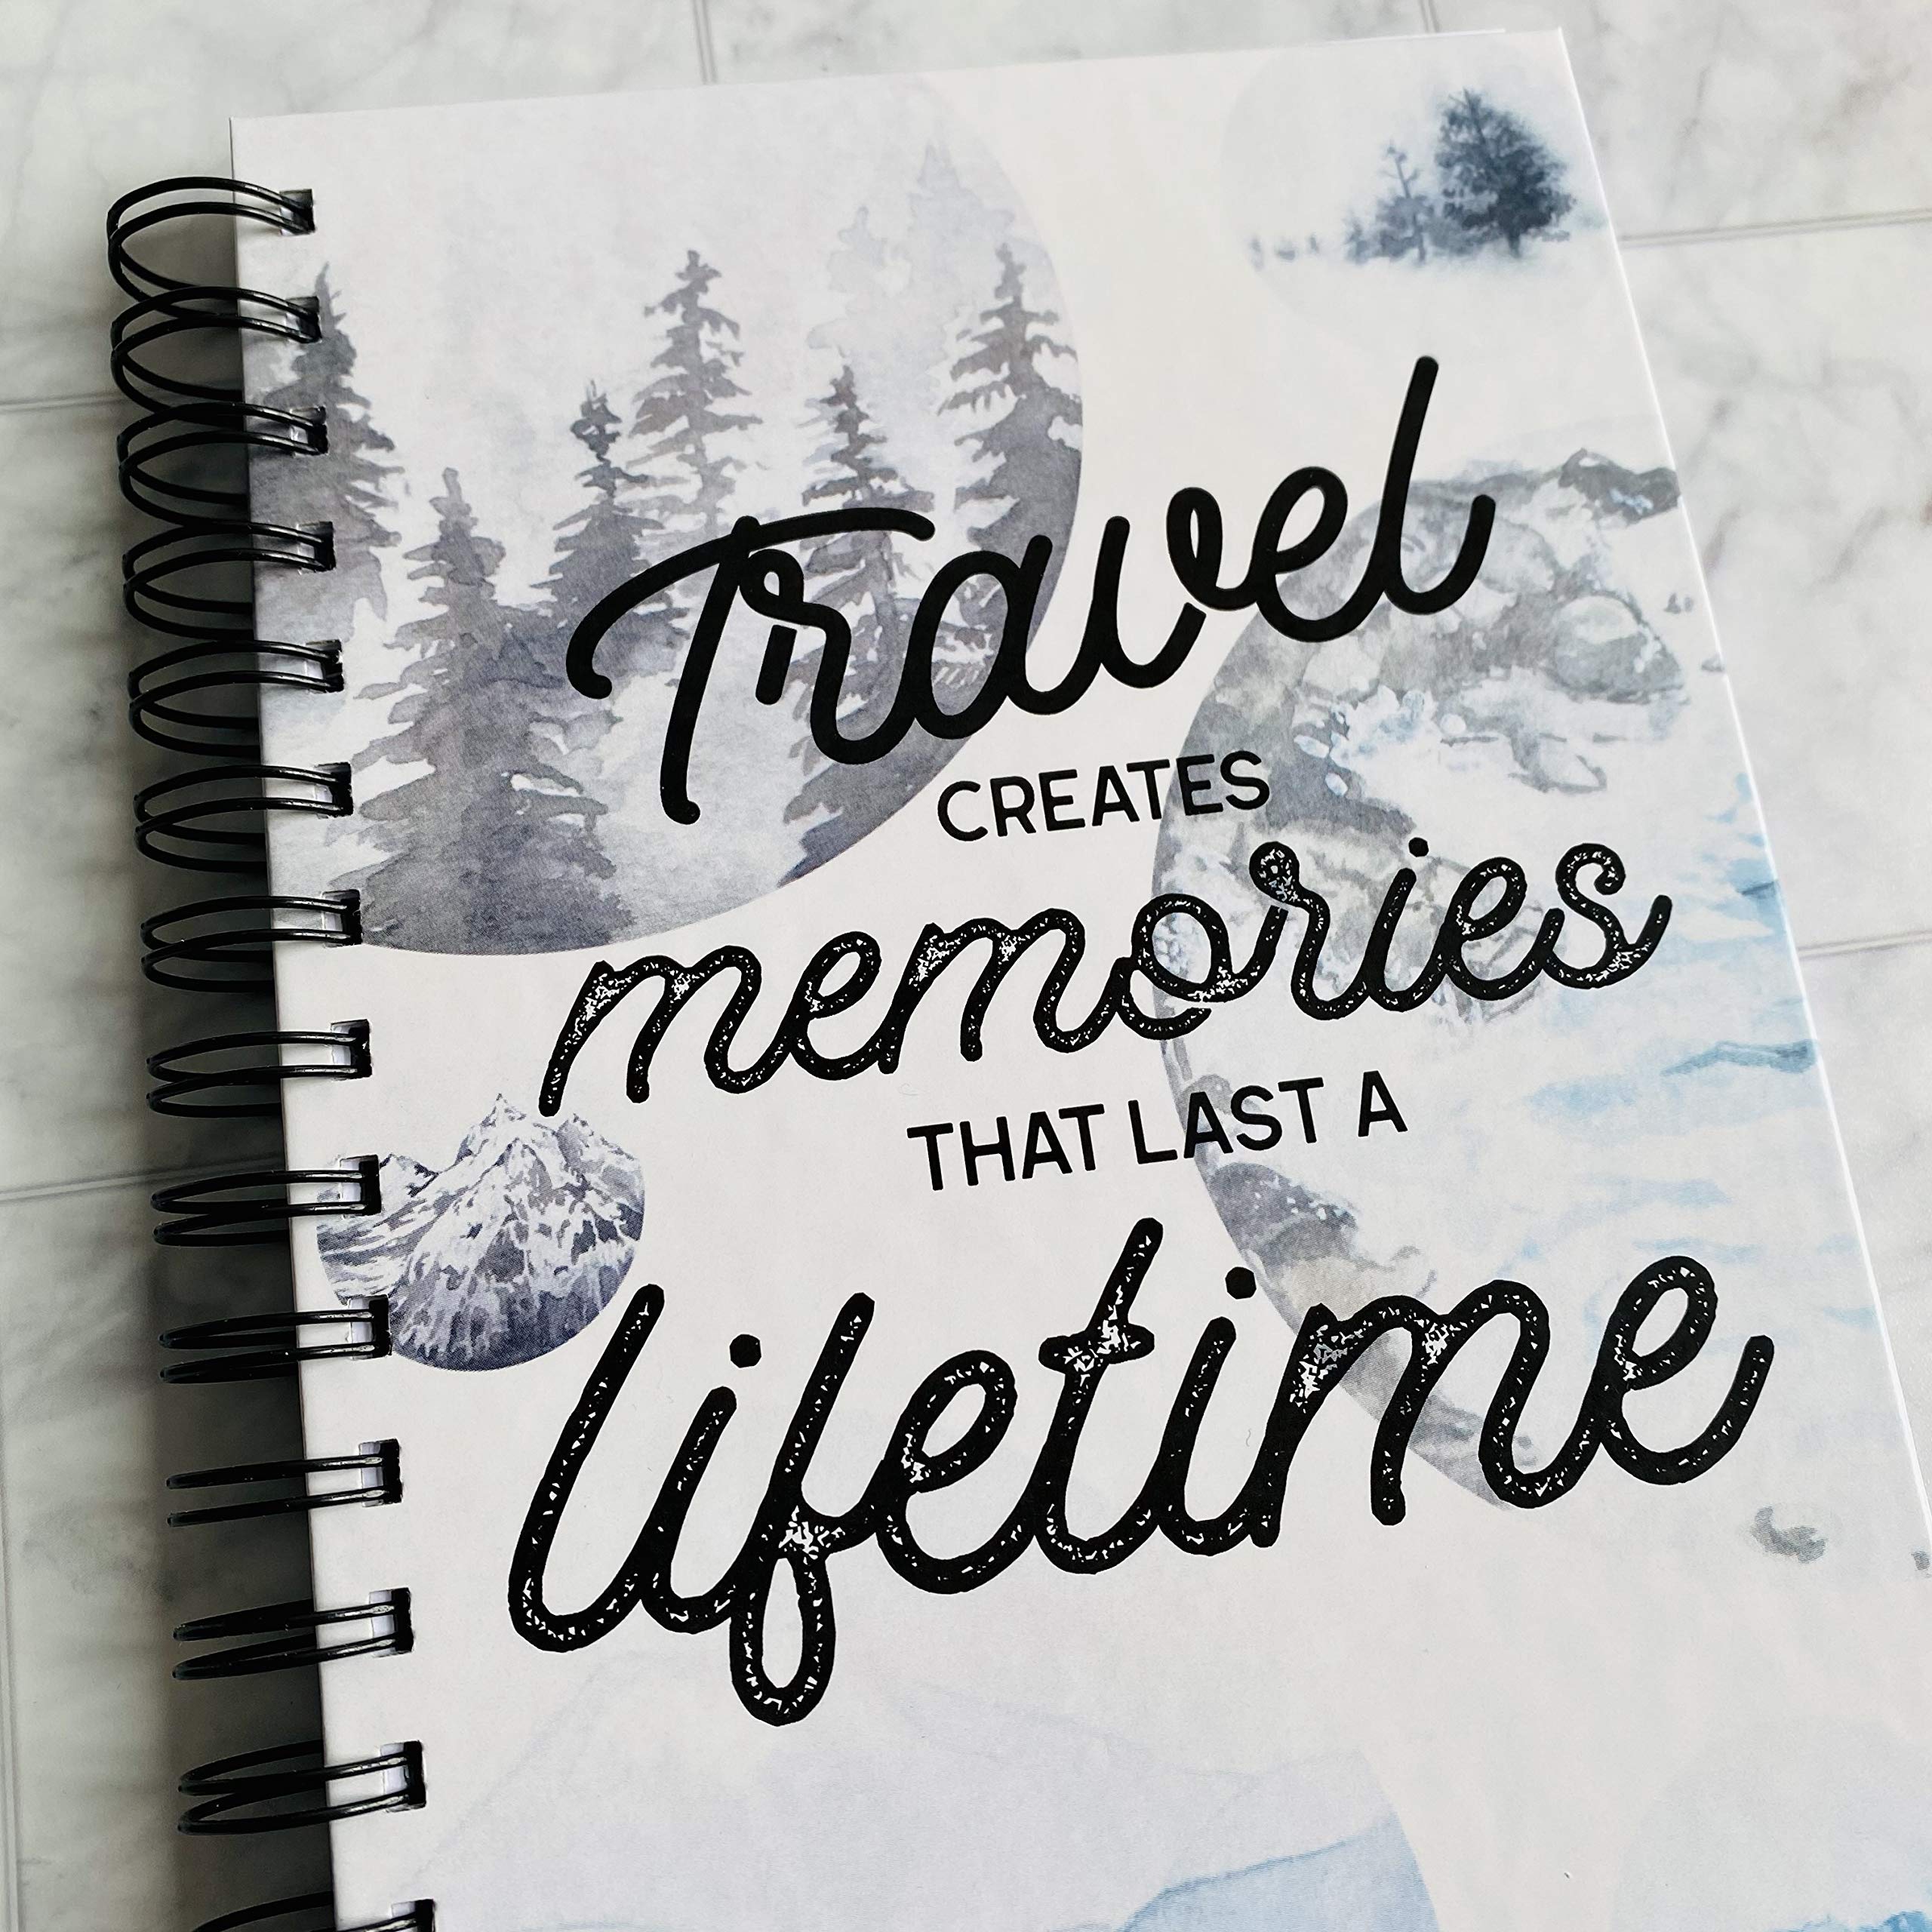 Travel Creates Memories That Last a Lifetime - Travel Log Book - Destination Memories - Scrapbook - Hardcover Spiral Bound Journal